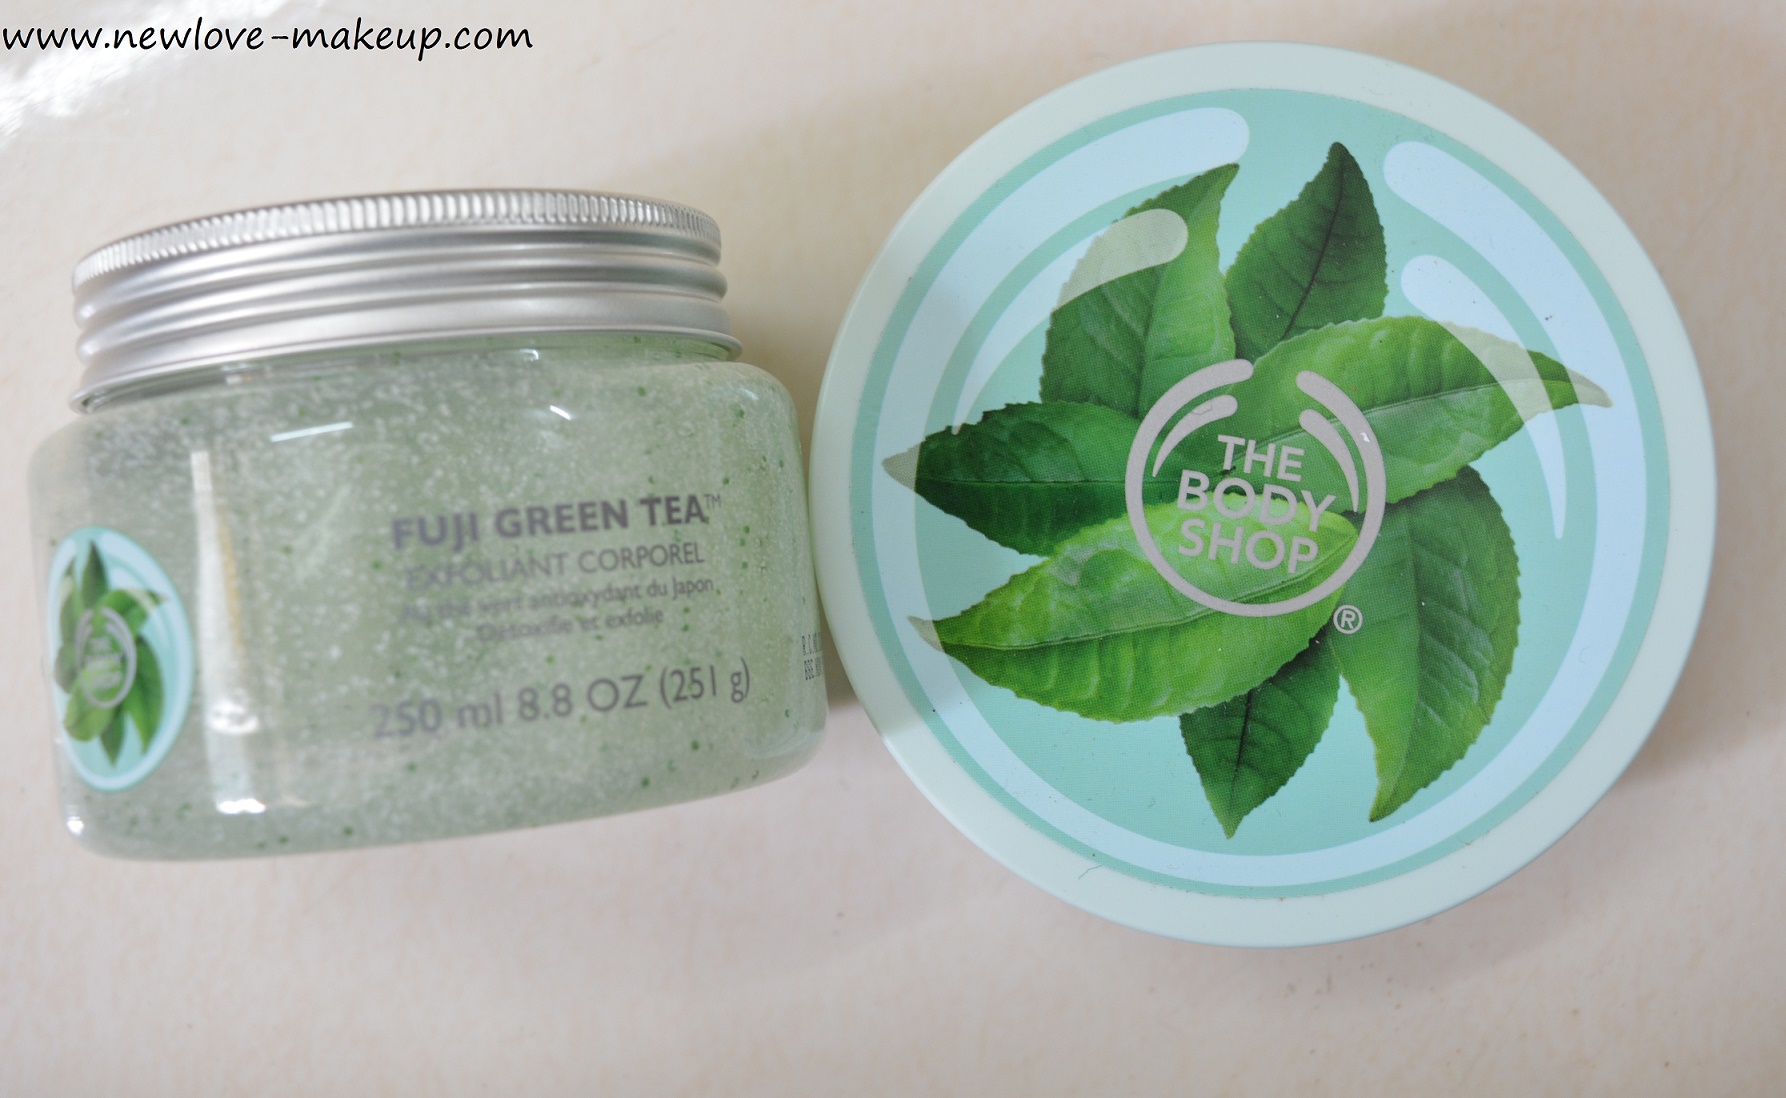 The Body Shop Fuji Green Tea Body Scrub, Body Butter Review - New Love -  Makeup